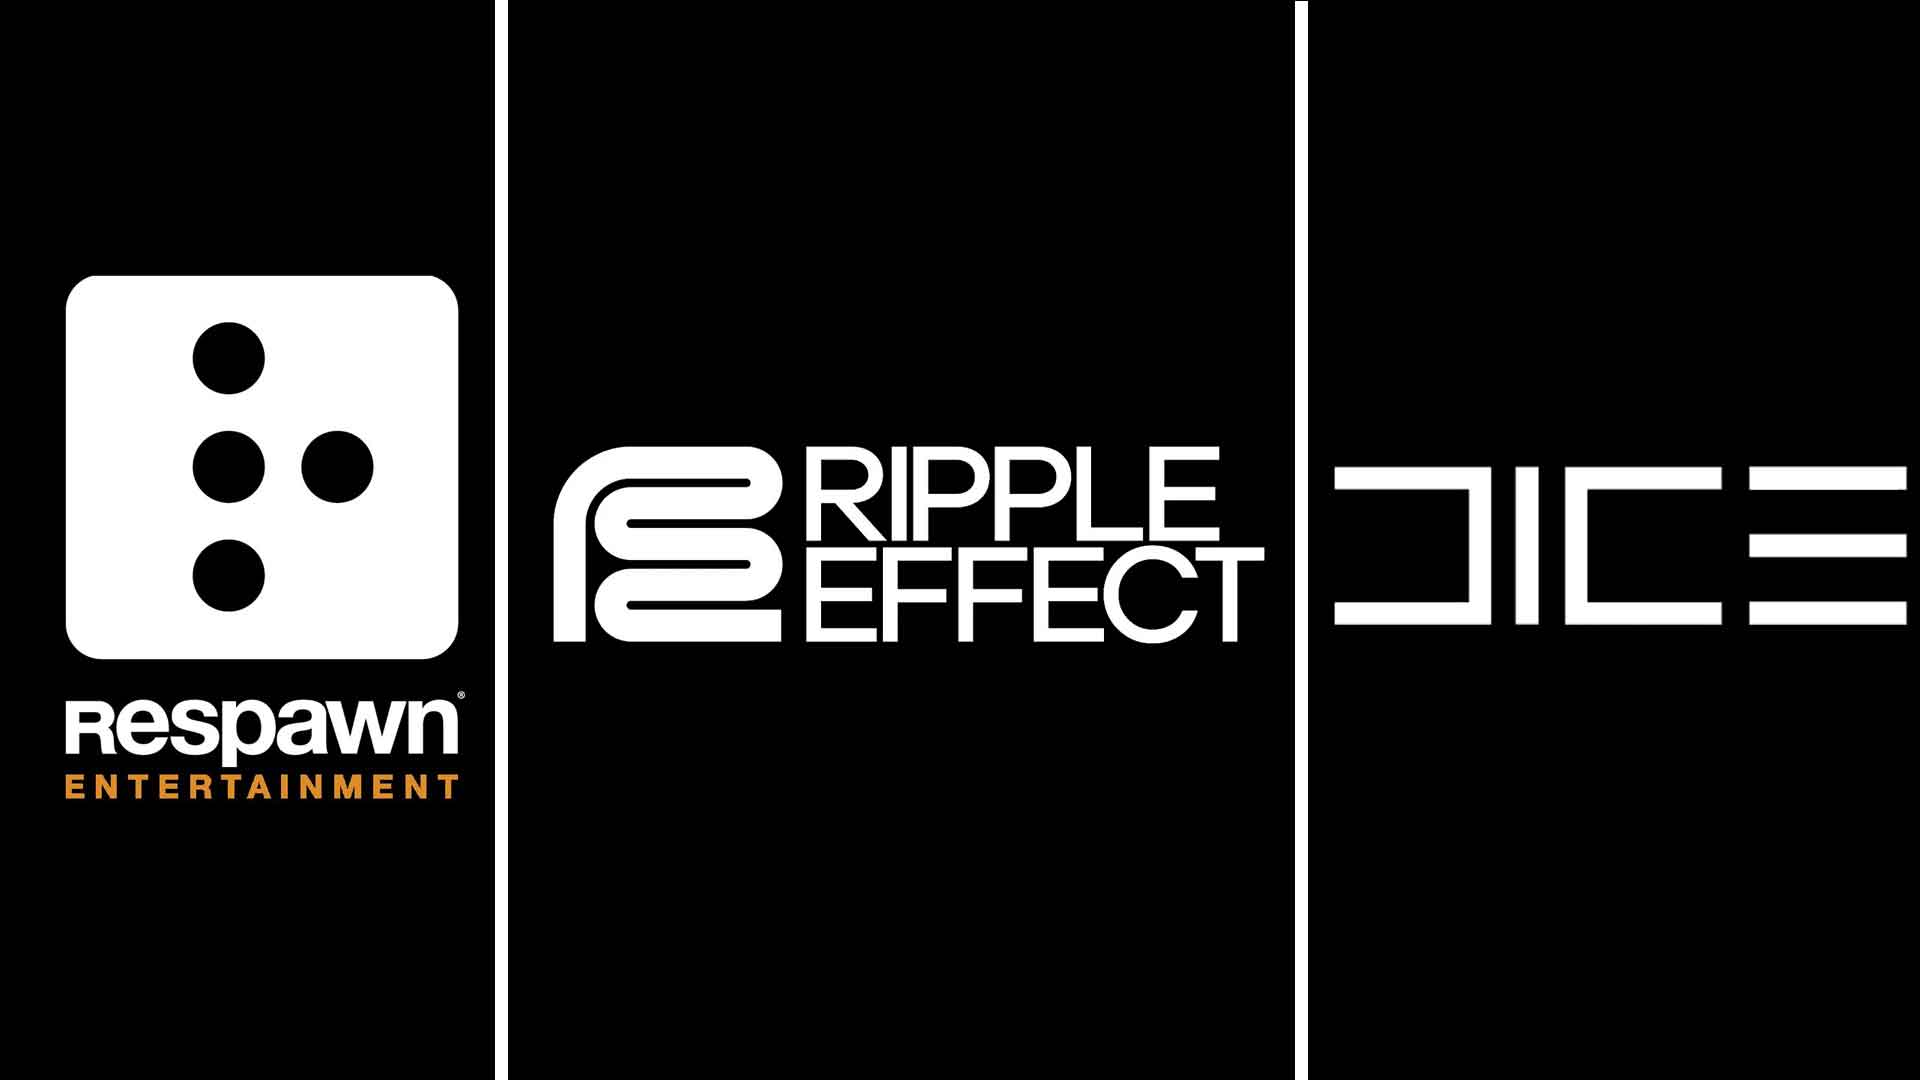 Respawn & DICE, Ripple Effect, GamersRD